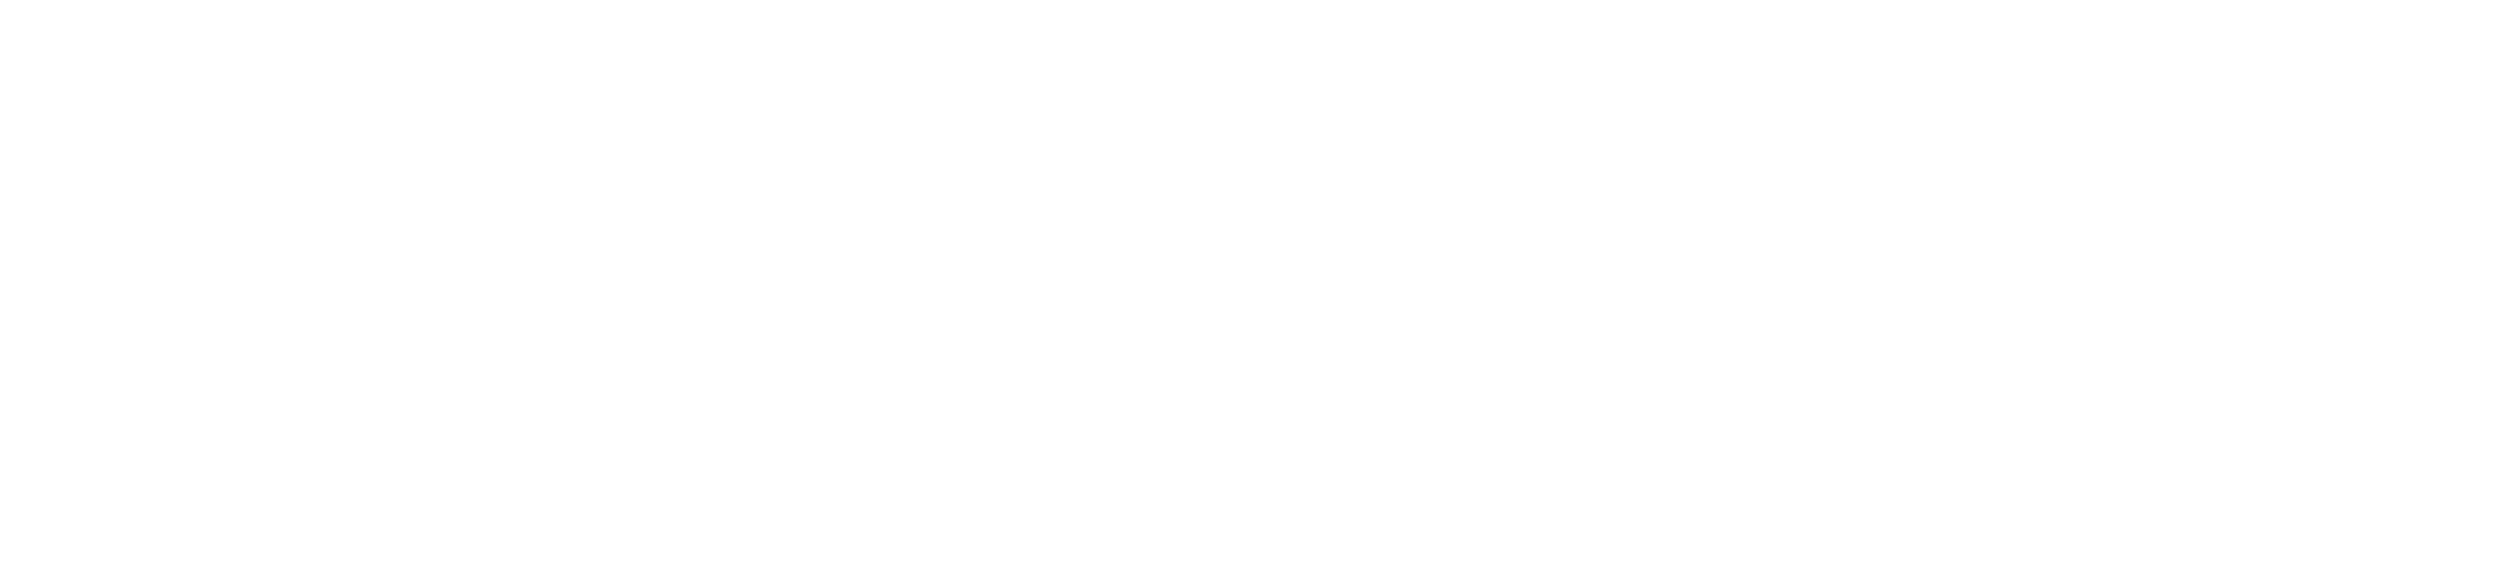 AZ Hops & Vines - Not Your Average Winery